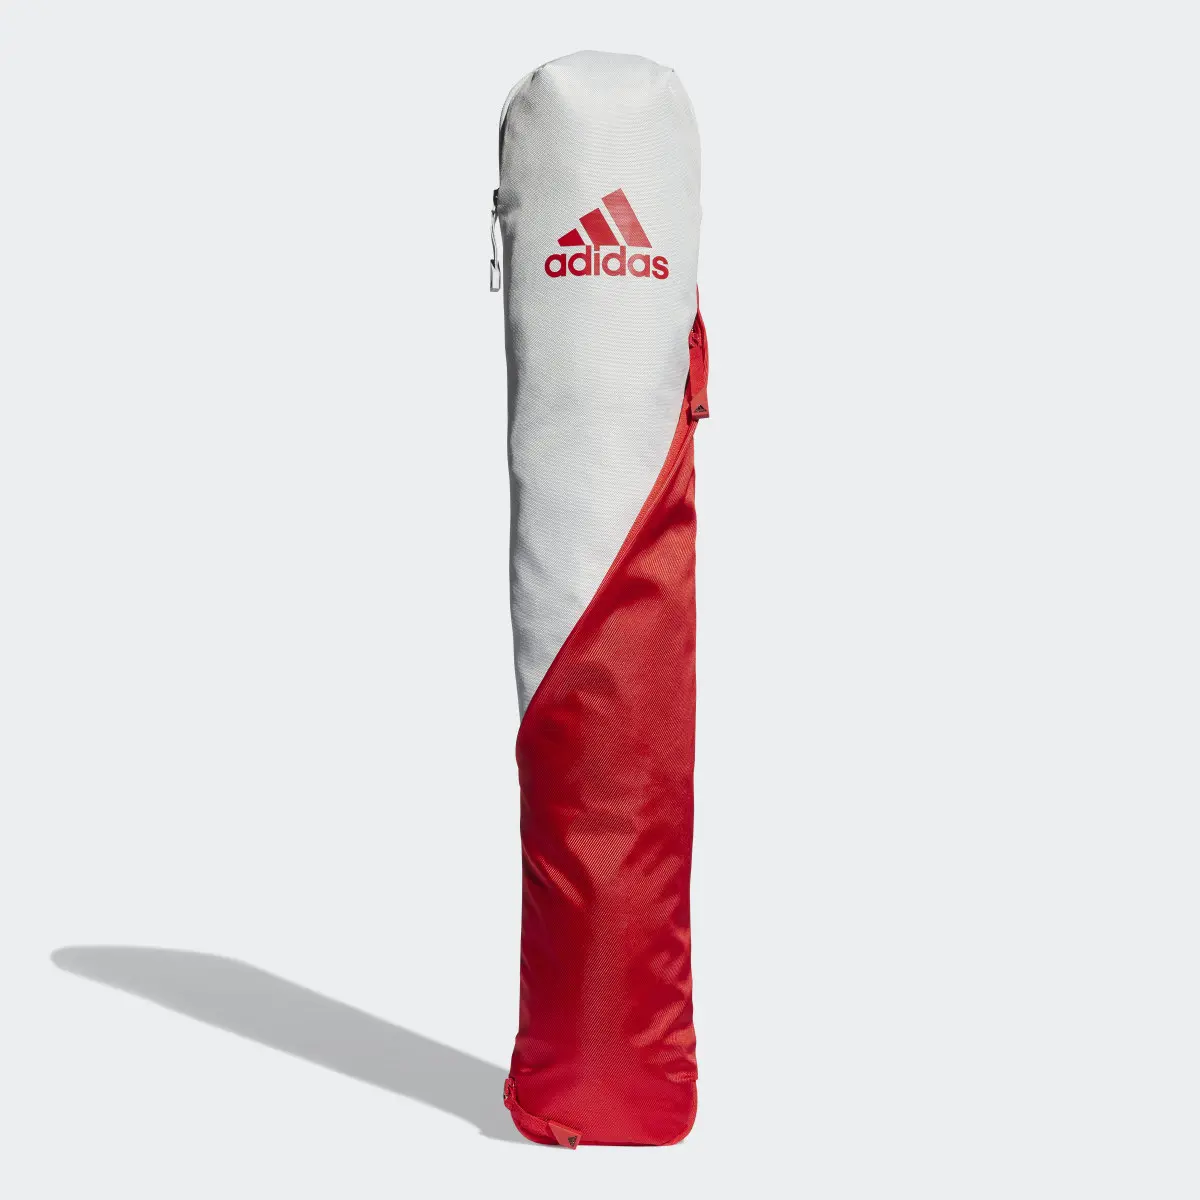 Adidas VS.6 Red/Grey Hockey Stick Sleeve. 2